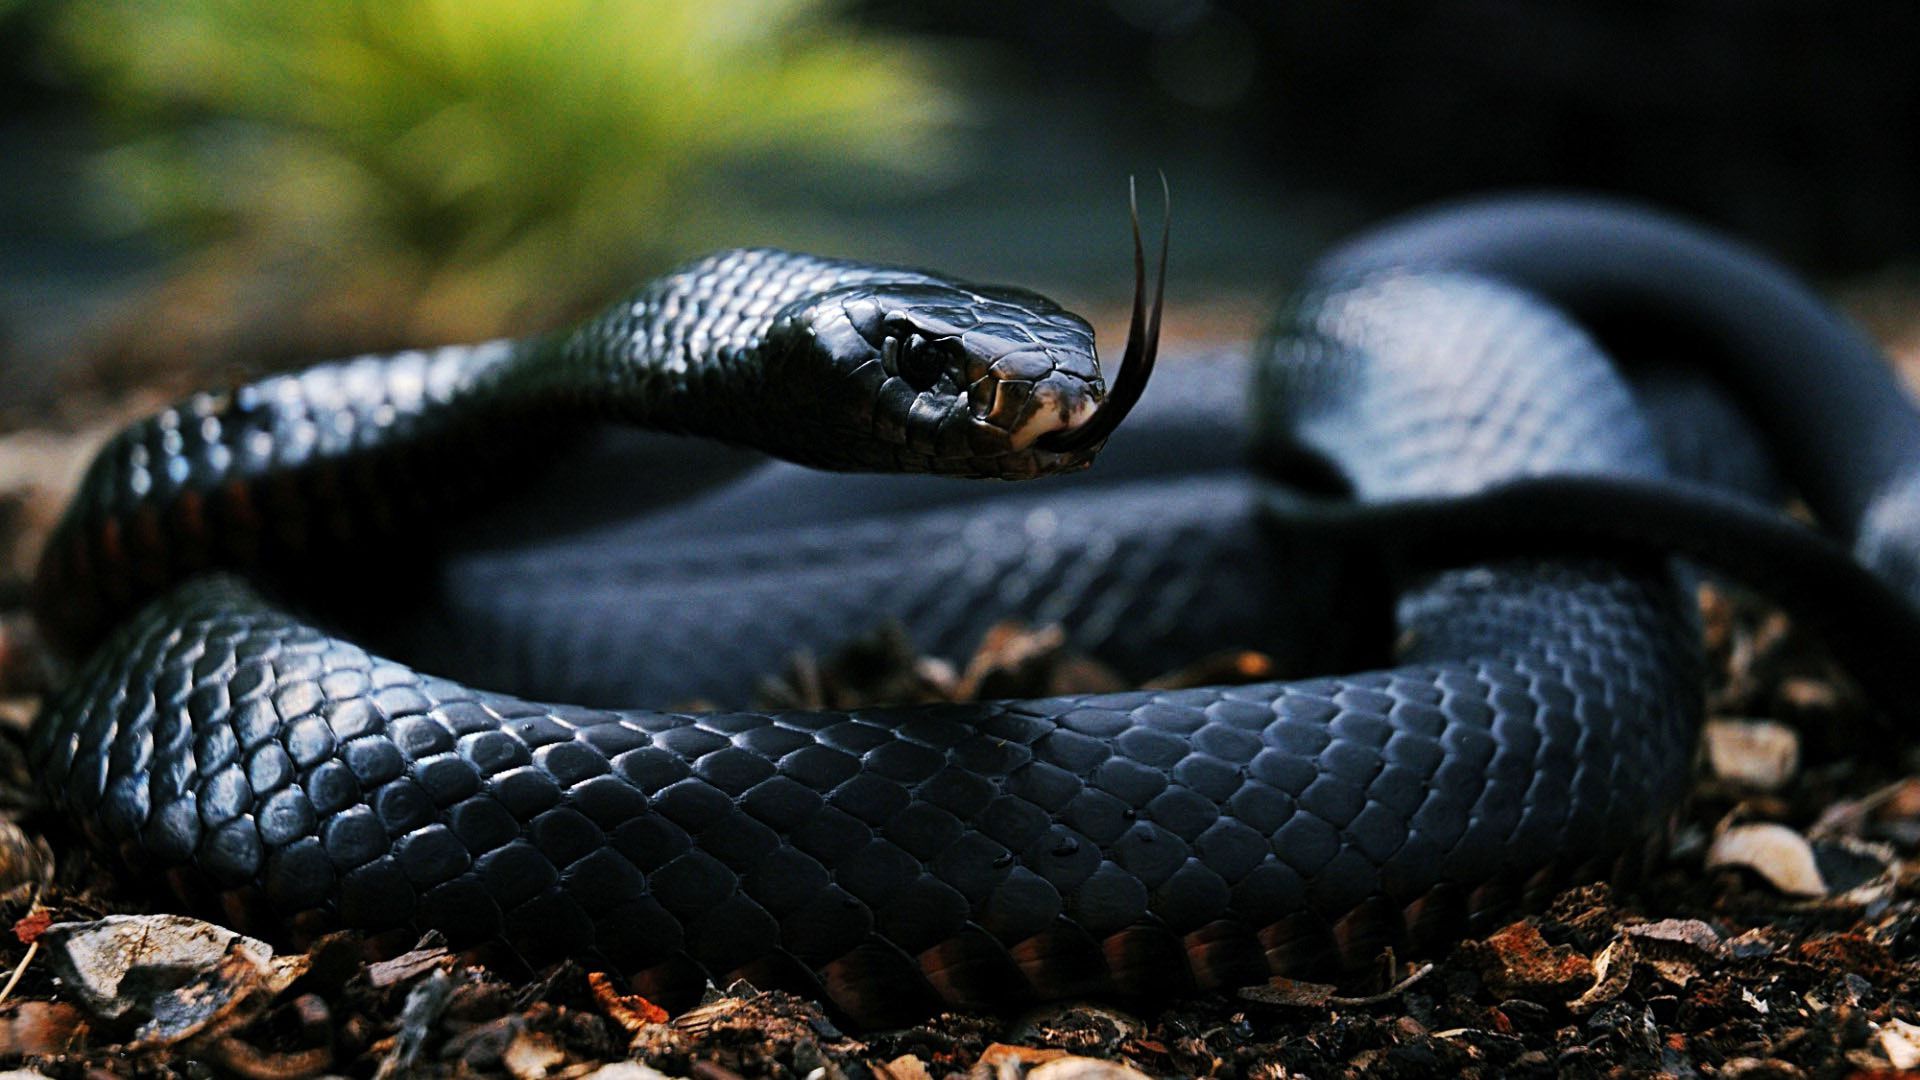 Best Monstrous Black Snake Wallpaper Pics With